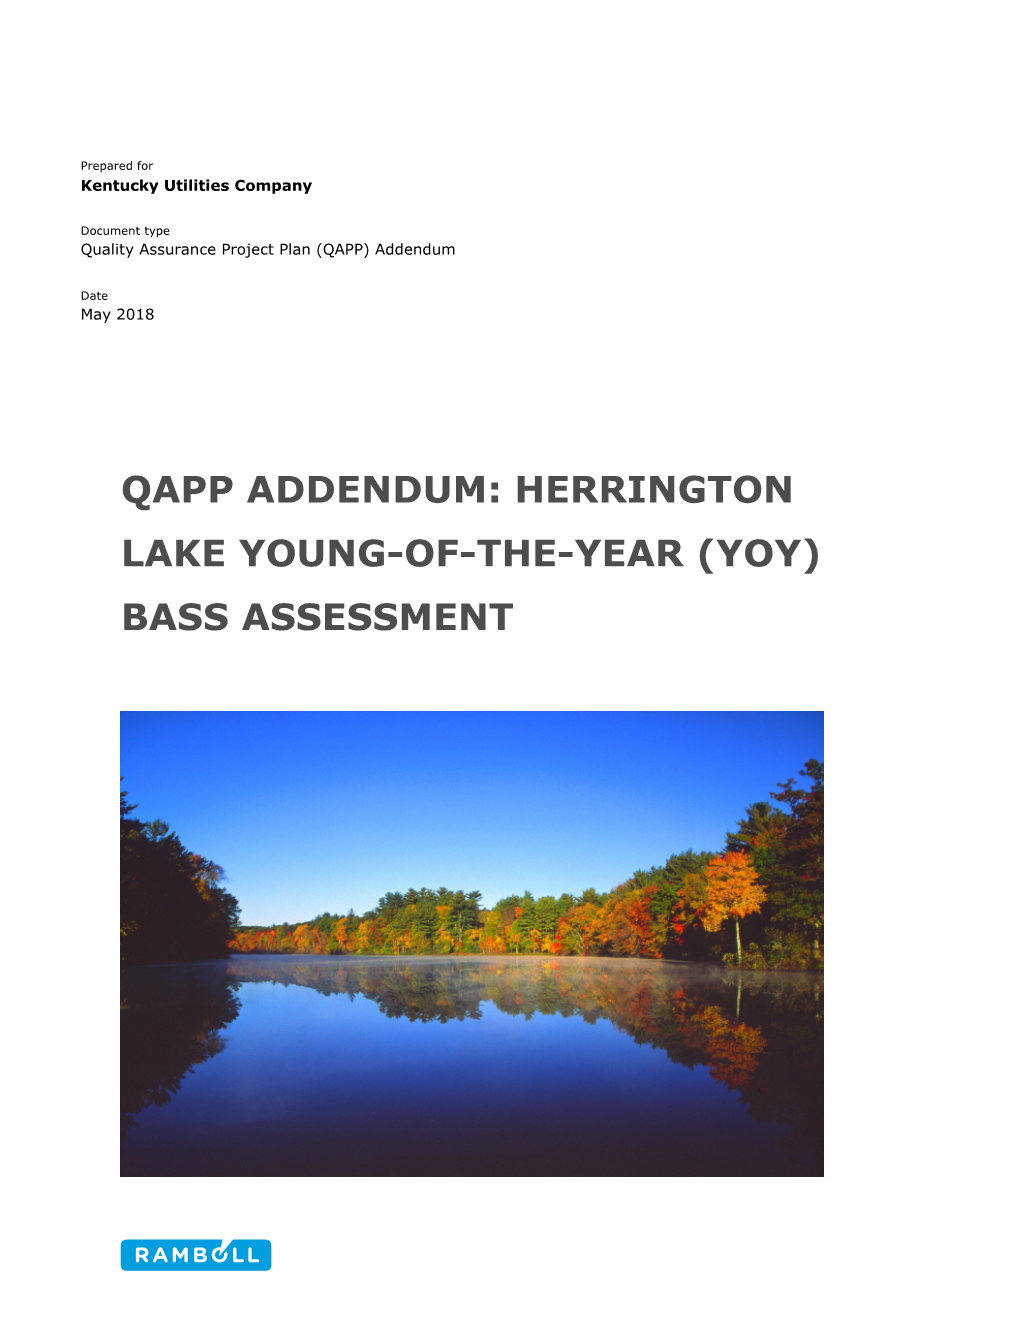 QAPP ADDENDUM: HERRINGTON LAKE YOUNG-OF-THE-YEAR (YOY) BASS ASSESSMENT QAPP Addendum: Herrington Lake YOY Bass Assessment Mercer County, Kentucky